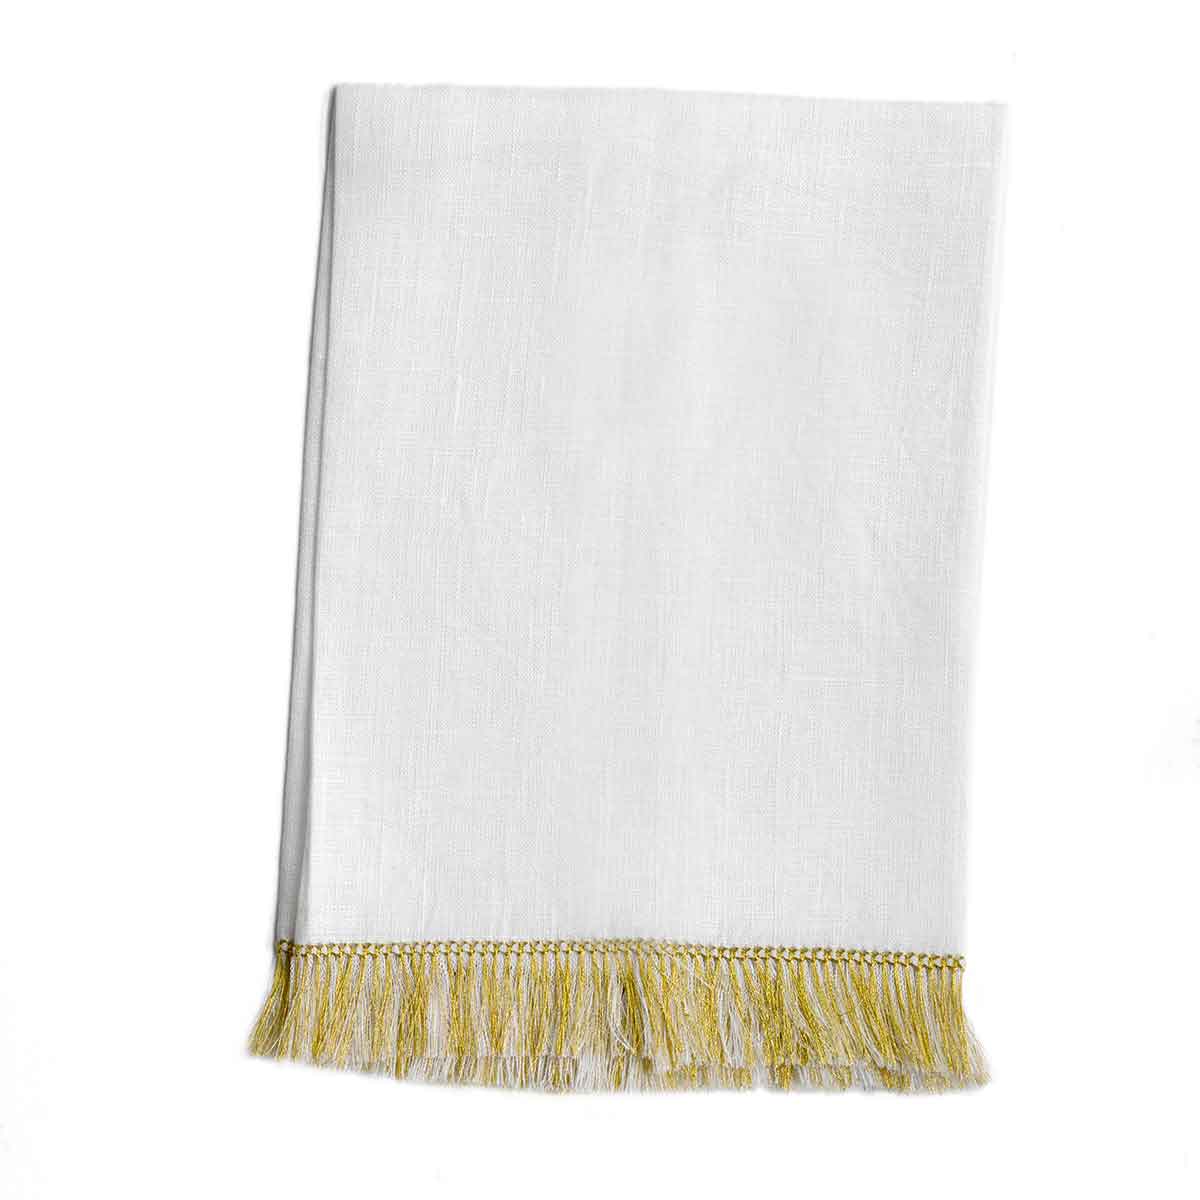 Fringe Benefits Guest Towel Metallic Gold | Garden Folly Fine Linens - linen like hand towels, blank embroidery hand towels, guest hand towels linen